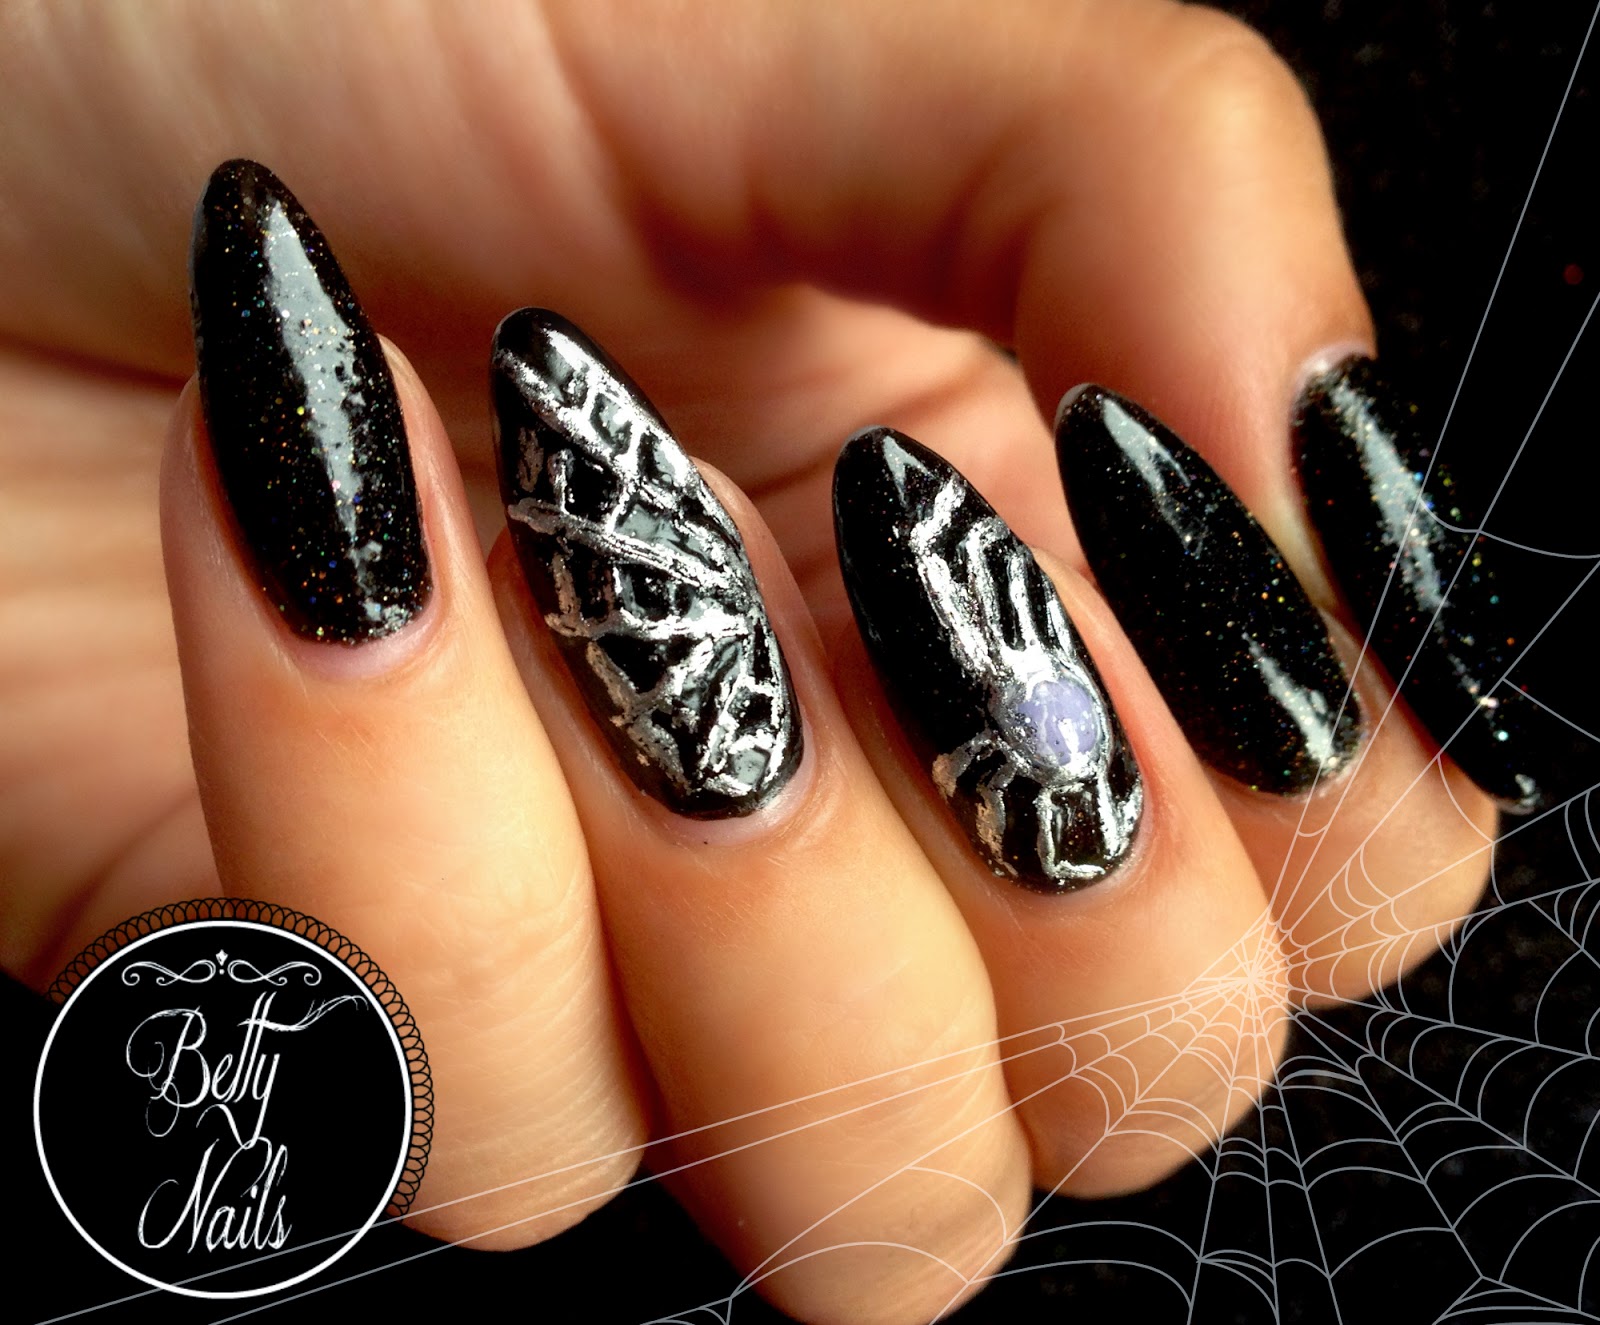 Betty Nails: Halloween Nails #2 - Spider Web Nails - Crazy Polish Lady